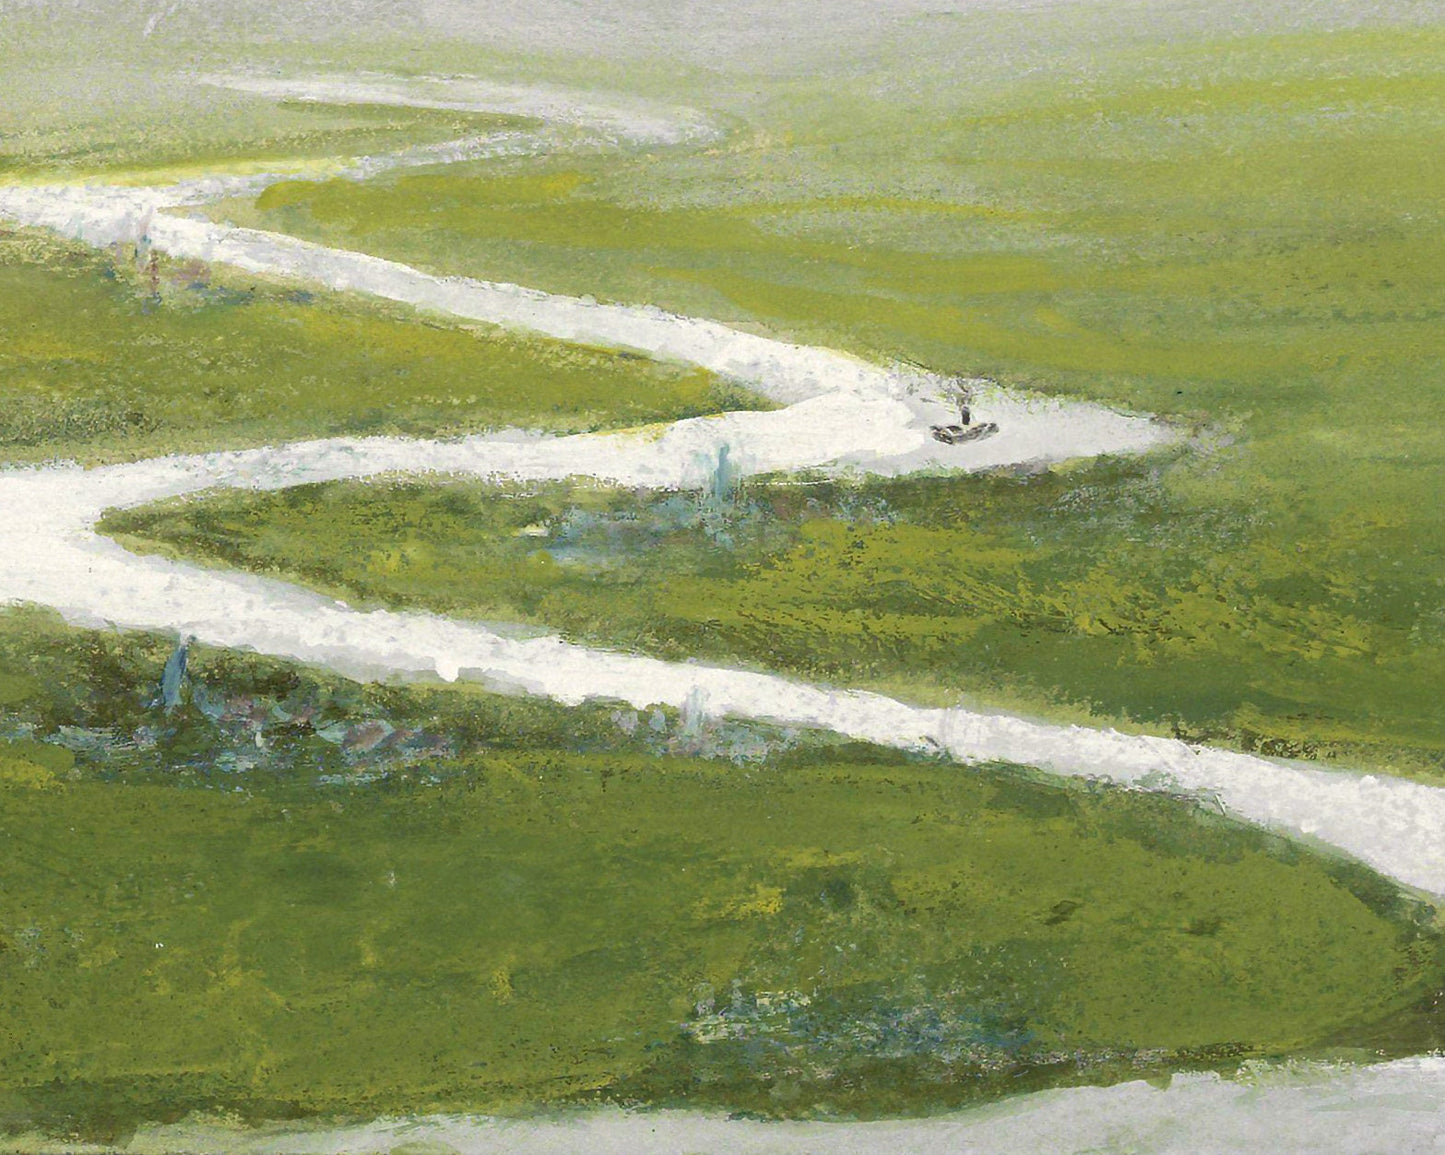 Dreamy river landscape art print | Vintage boat on a river | 19th century Watercolor painting | Giclée fine art | Eco-friendly gift